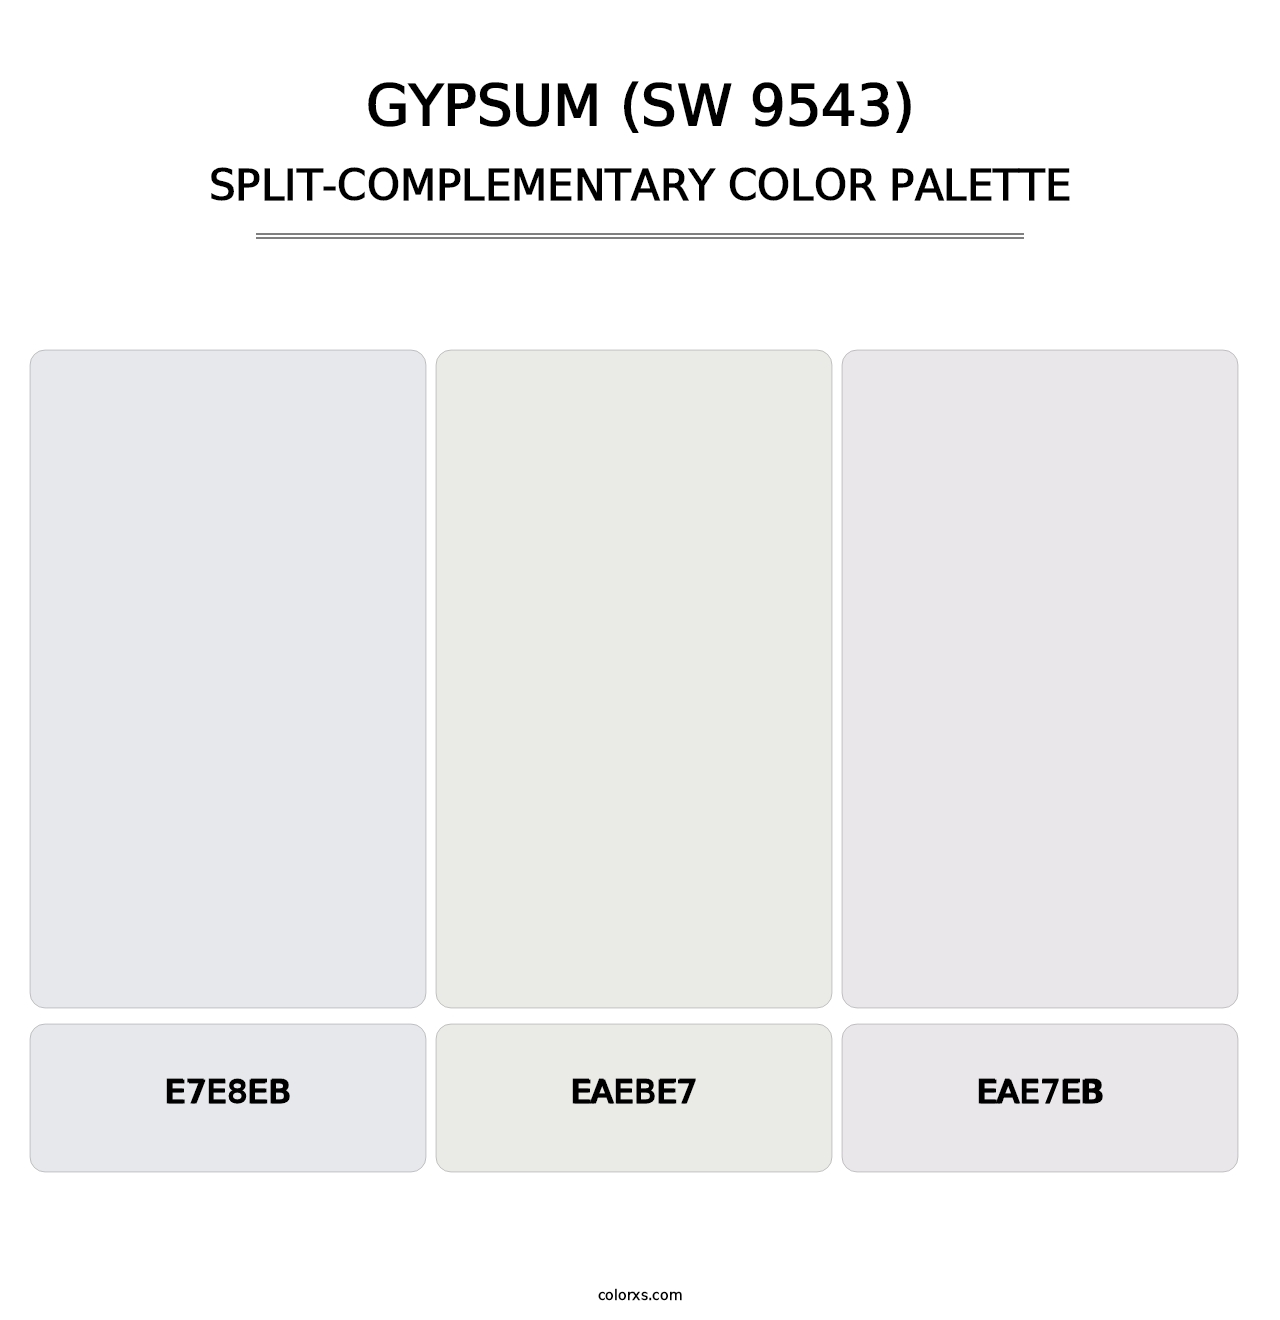 Gypsum (SW 9543) - Split-Complementary Color Palette